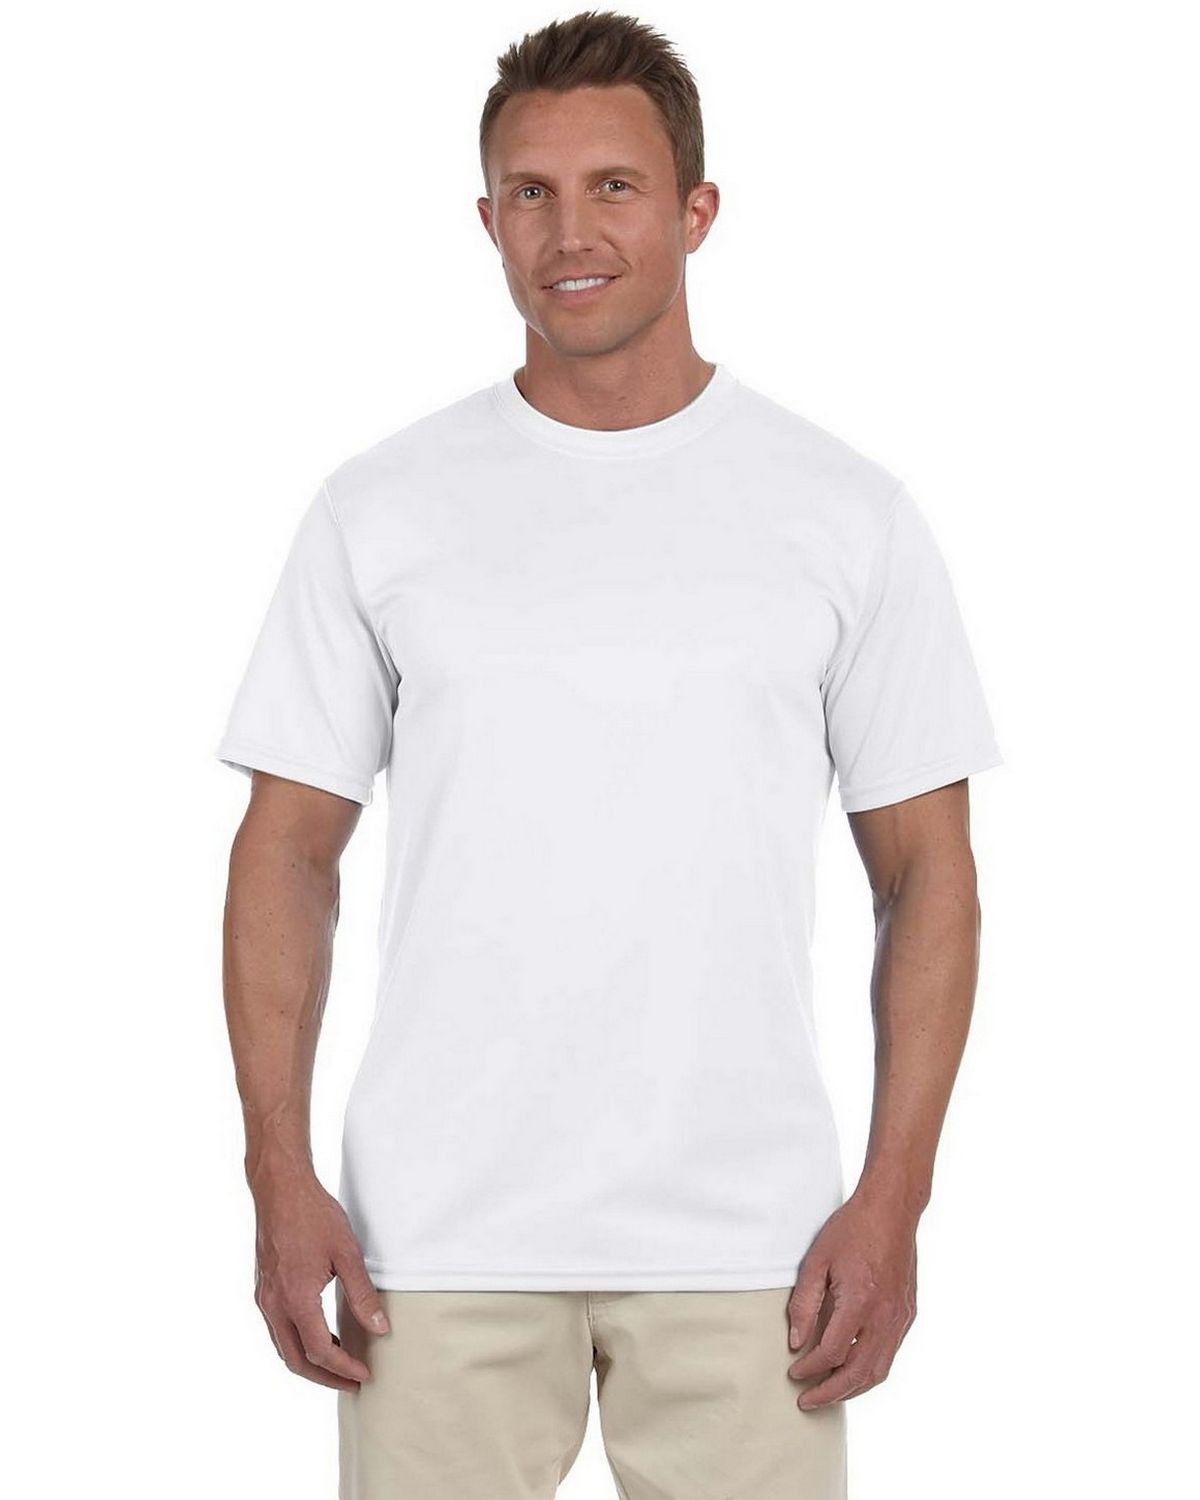 Augusta Sportswear 790 Men's Polyester Moisture Wicking T Shirt